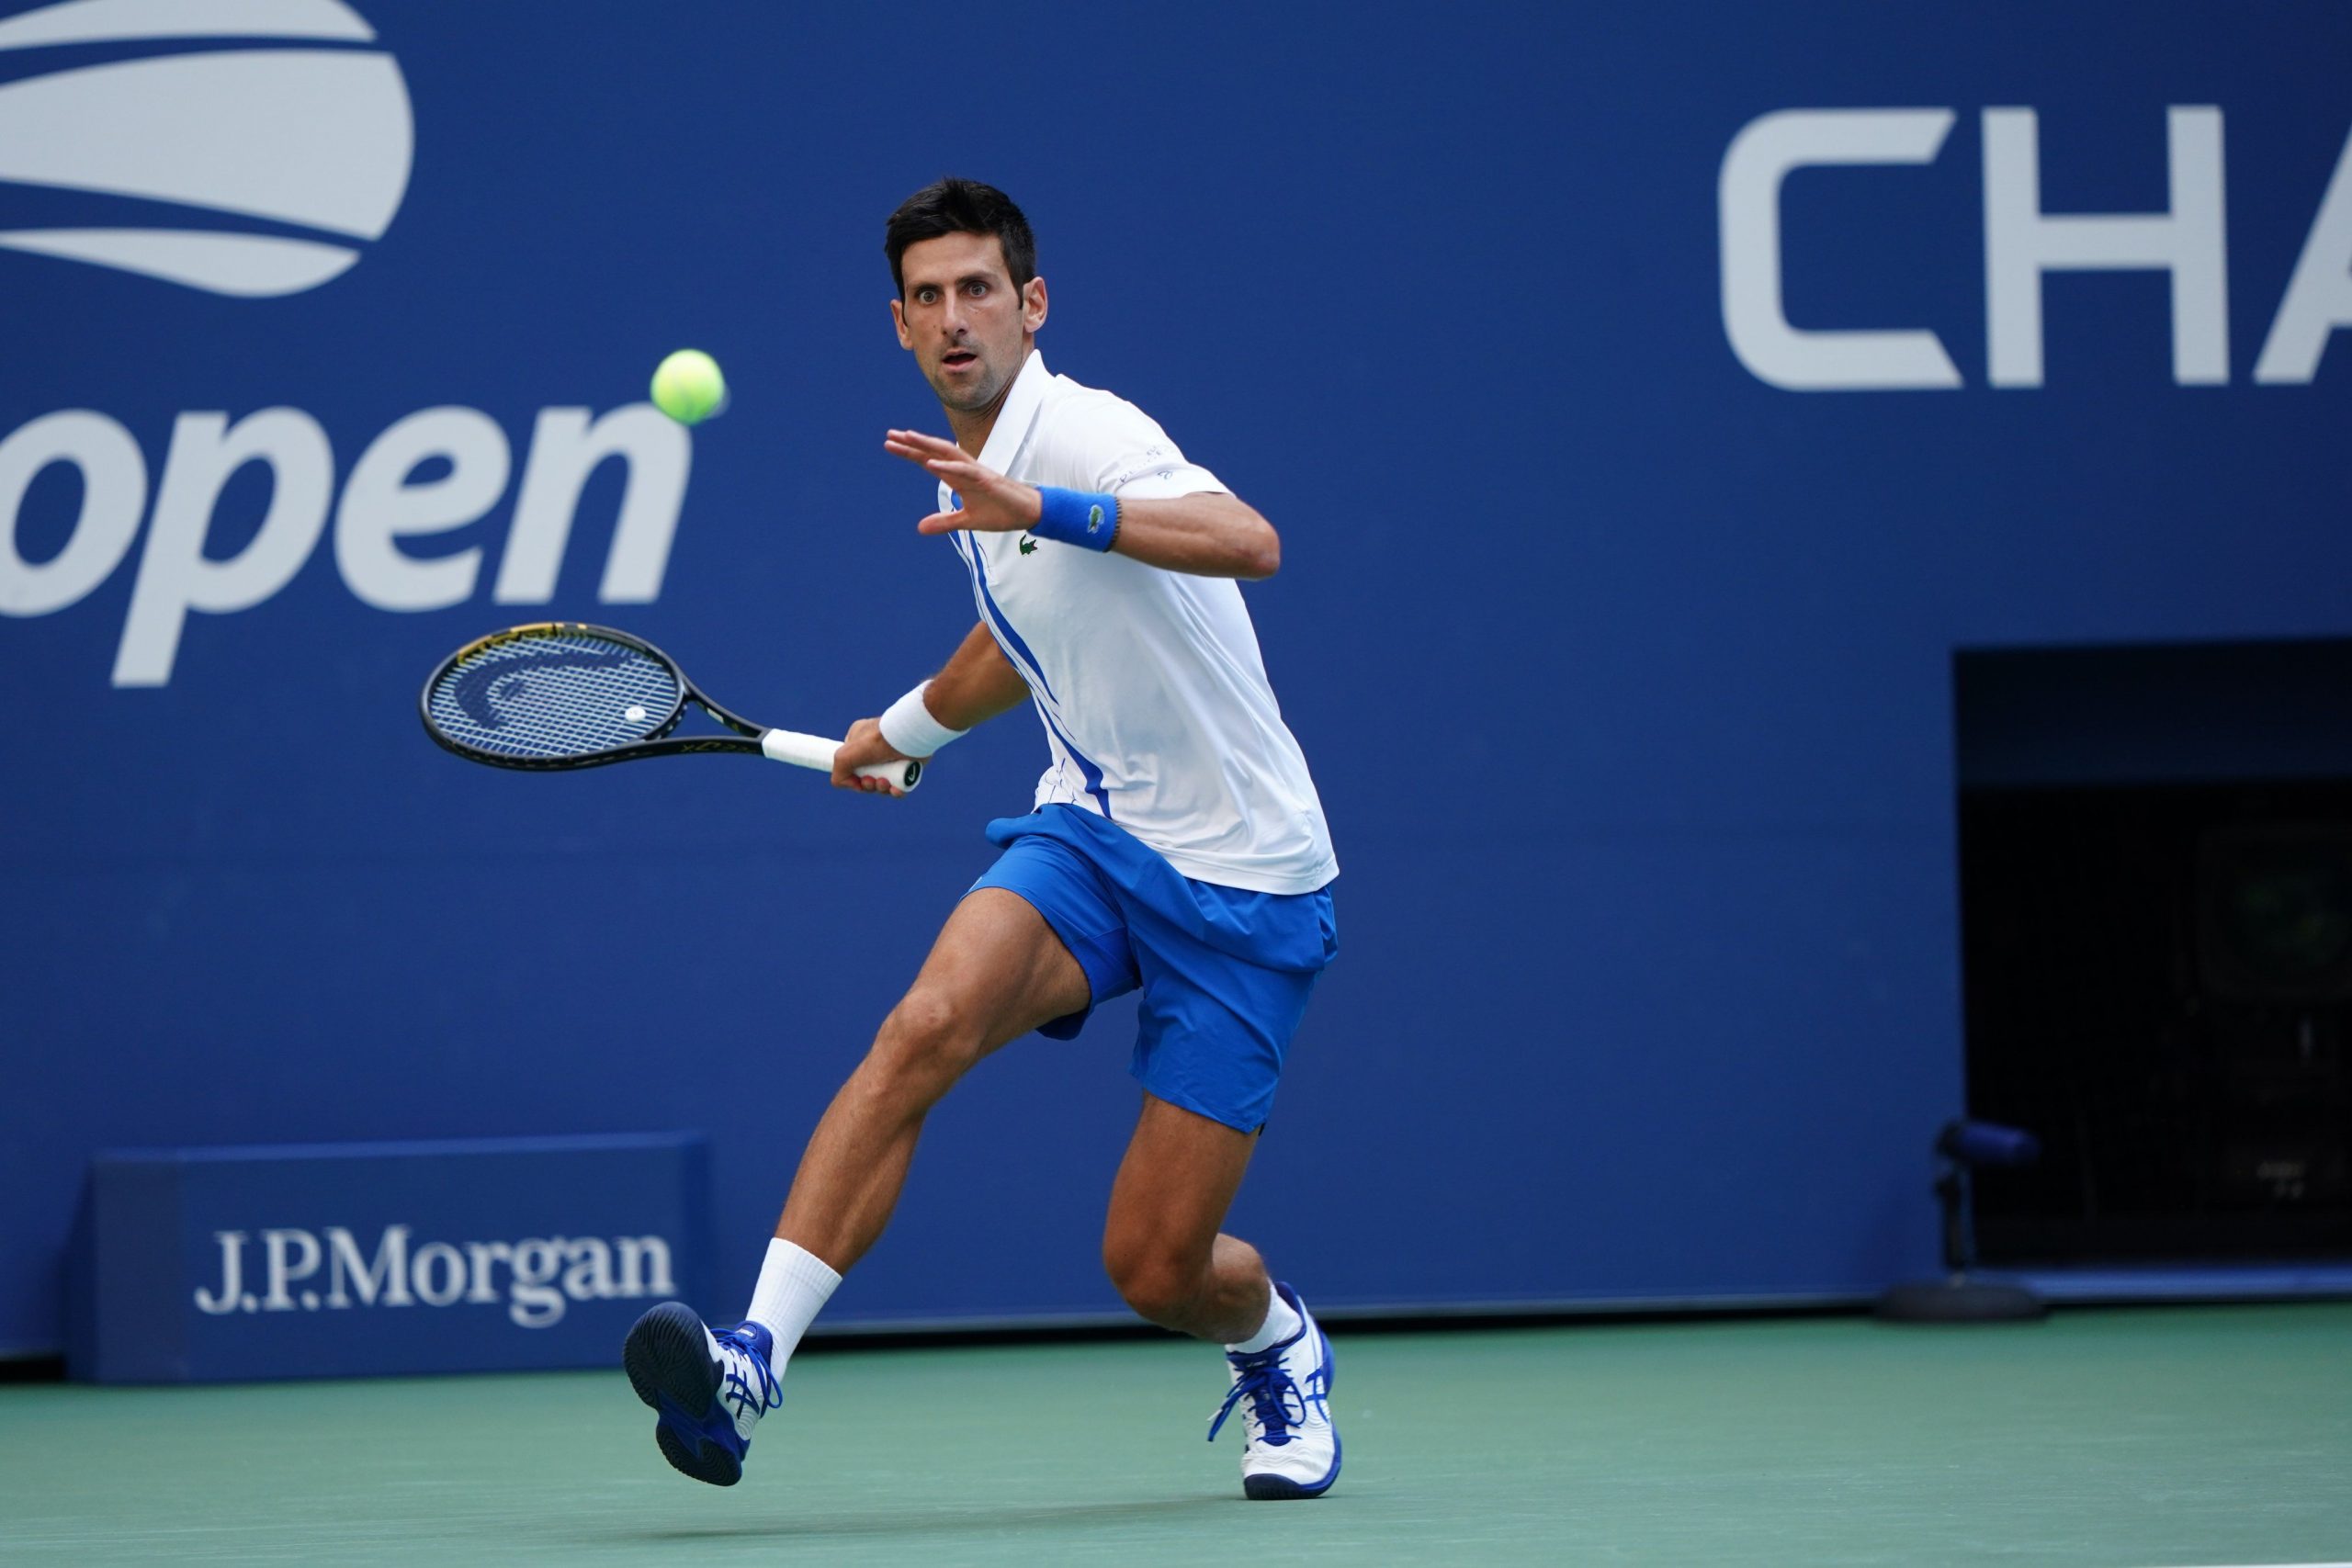 Novak Djokovic disqualified: United States Tennis Association’s statement on the incident